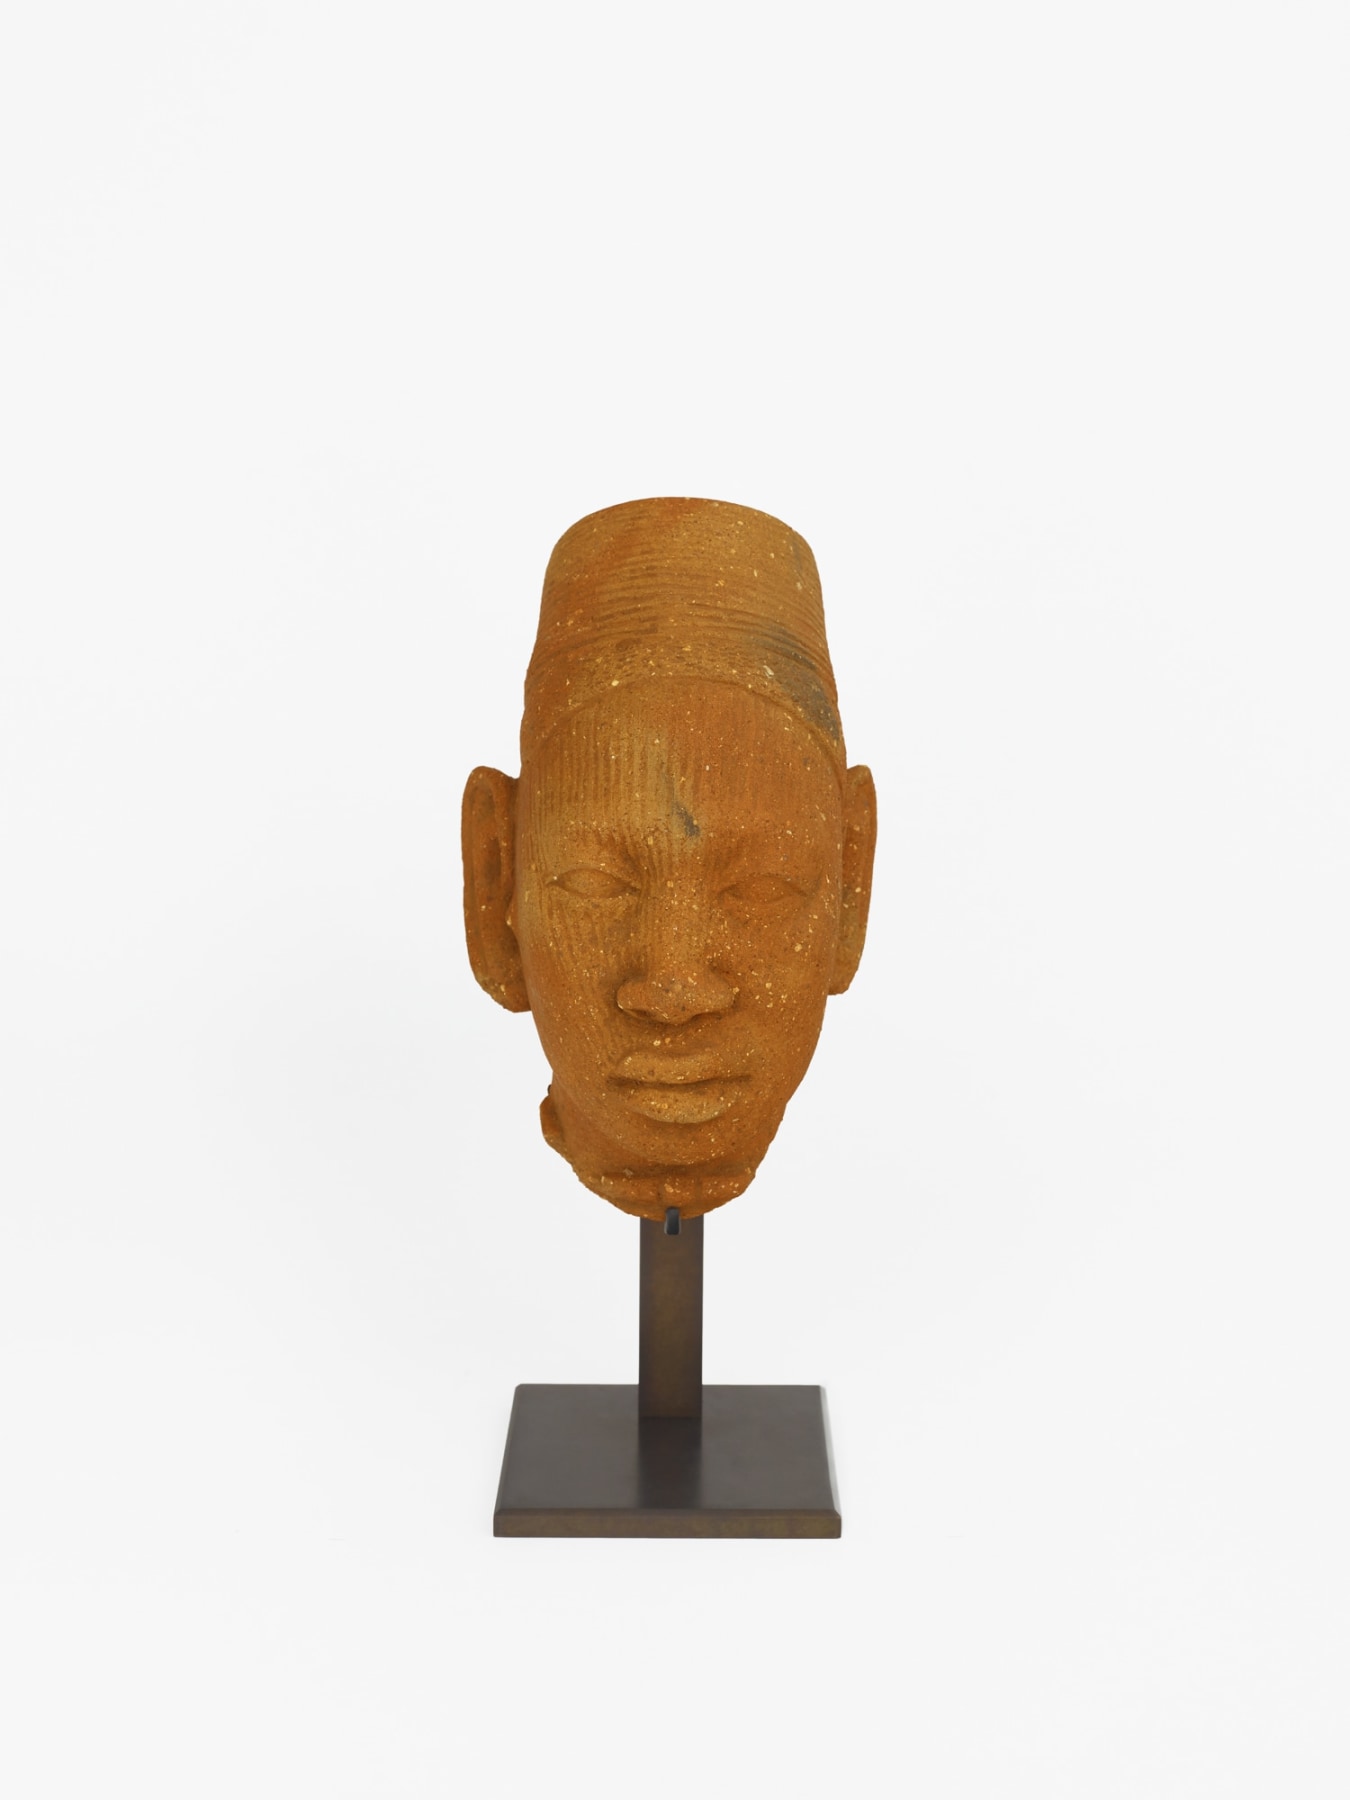 Terracotta Head, IFE Nigeria